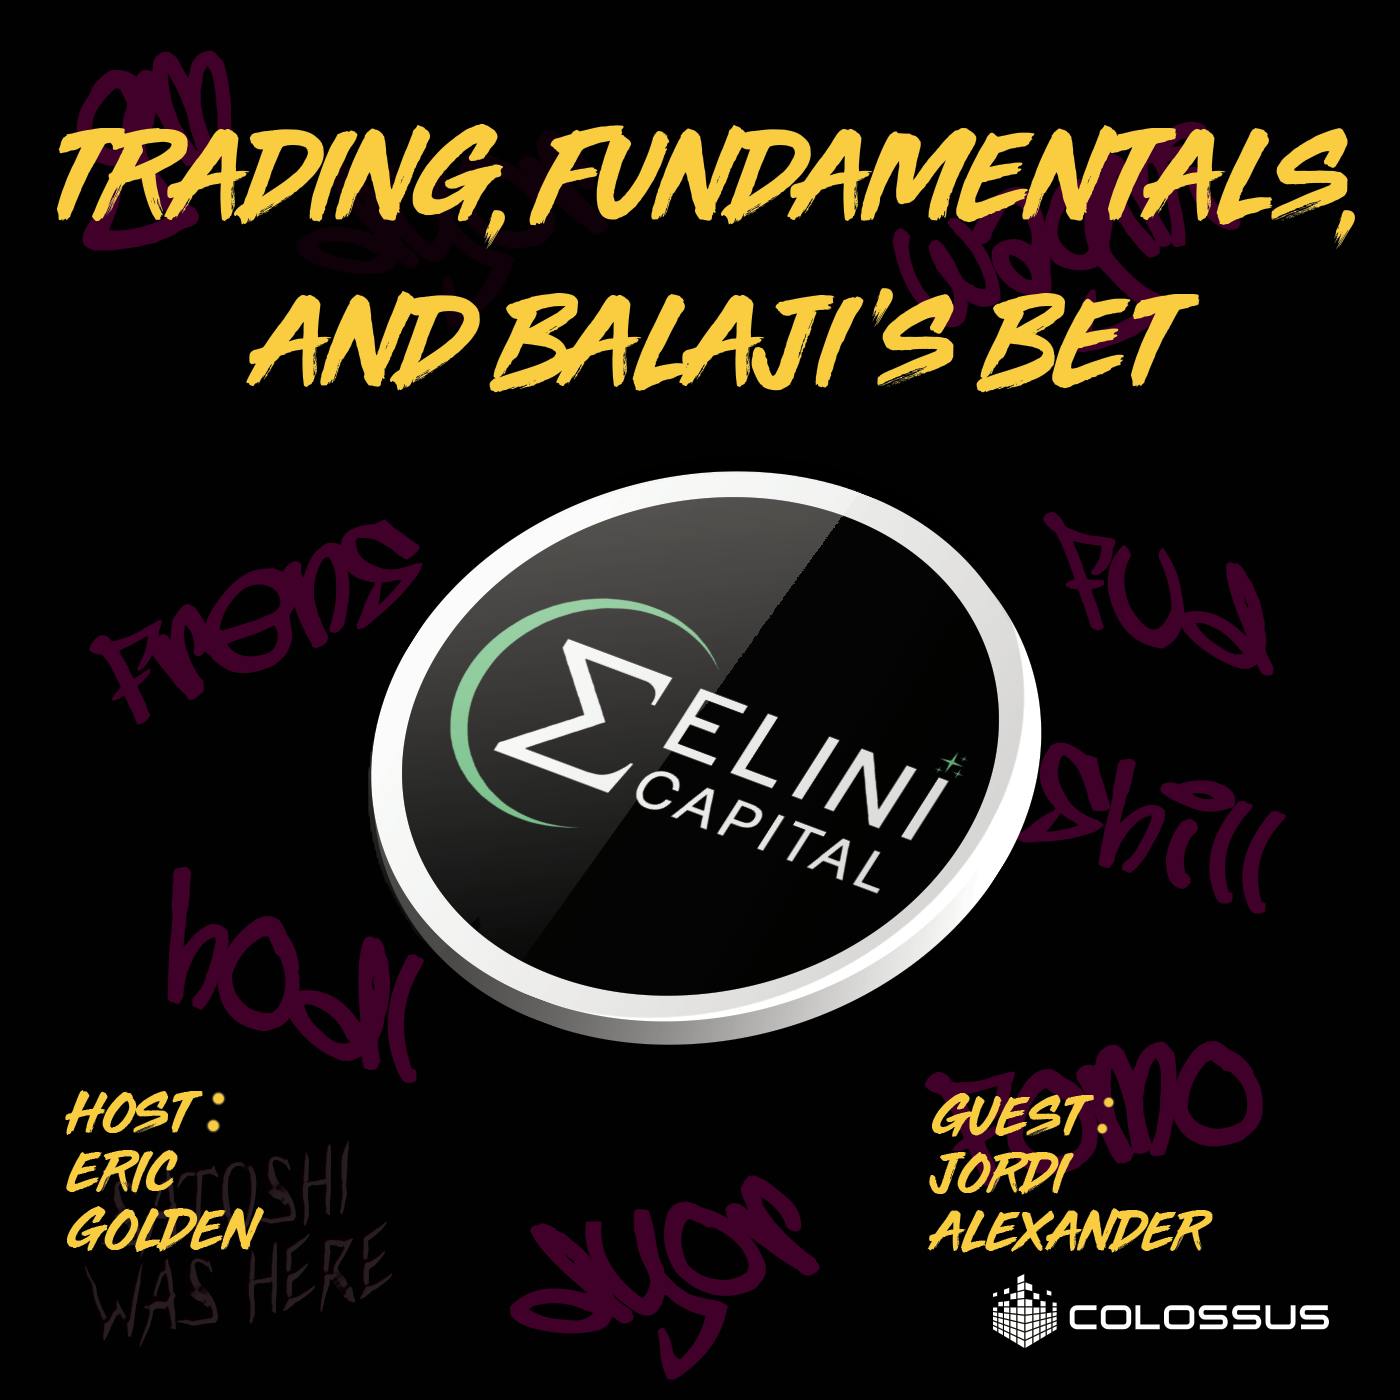 Jordi Alexander: Trading, Fundamentals, and Balaji's Bet - [Web3 Breakdowns, EP.70]